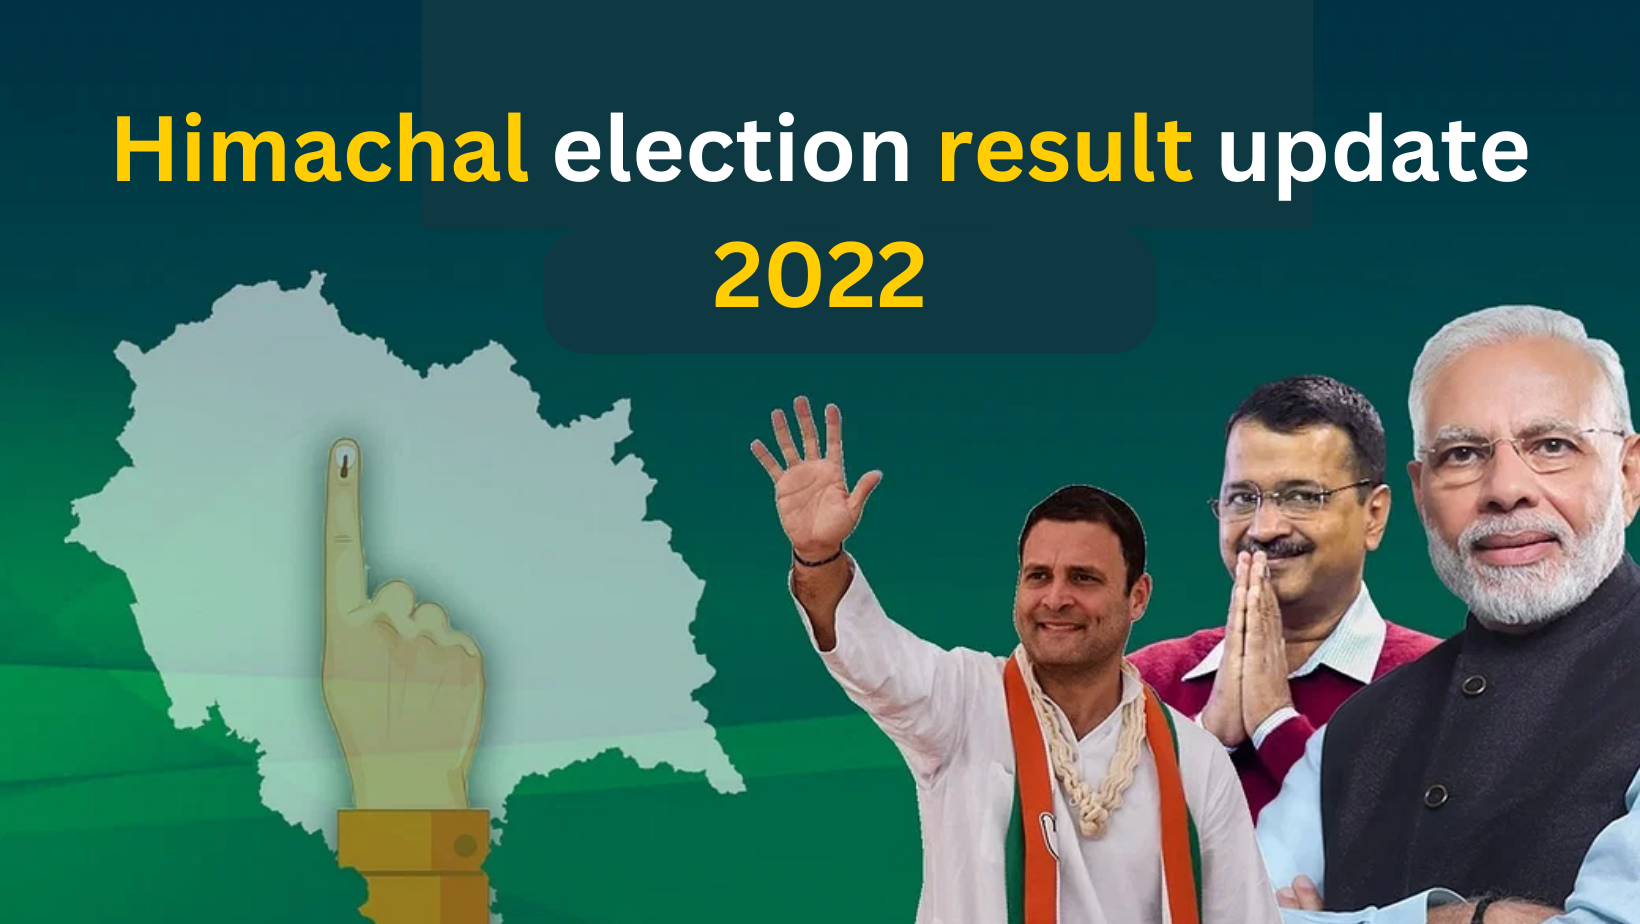 Himachal election result update 2022